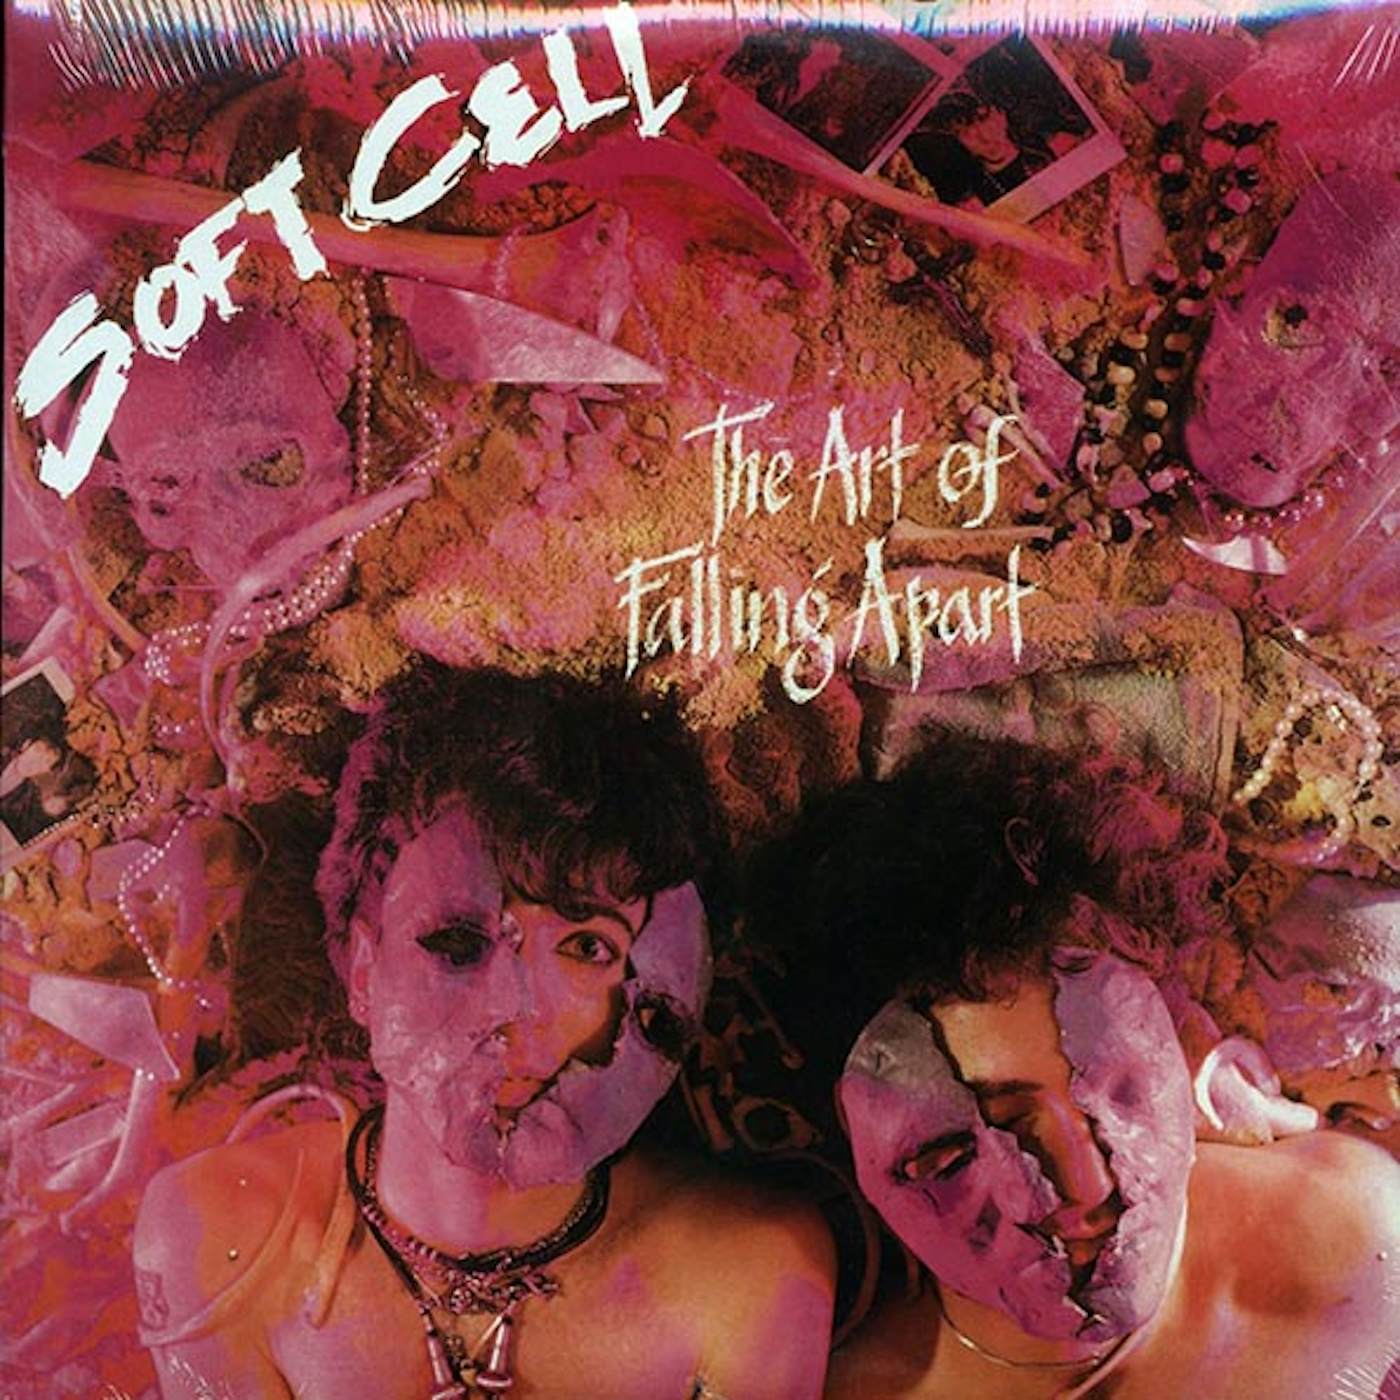 Soft Cell  LP -  The Art Of Falling Apart (2xLP) (Vinyl)